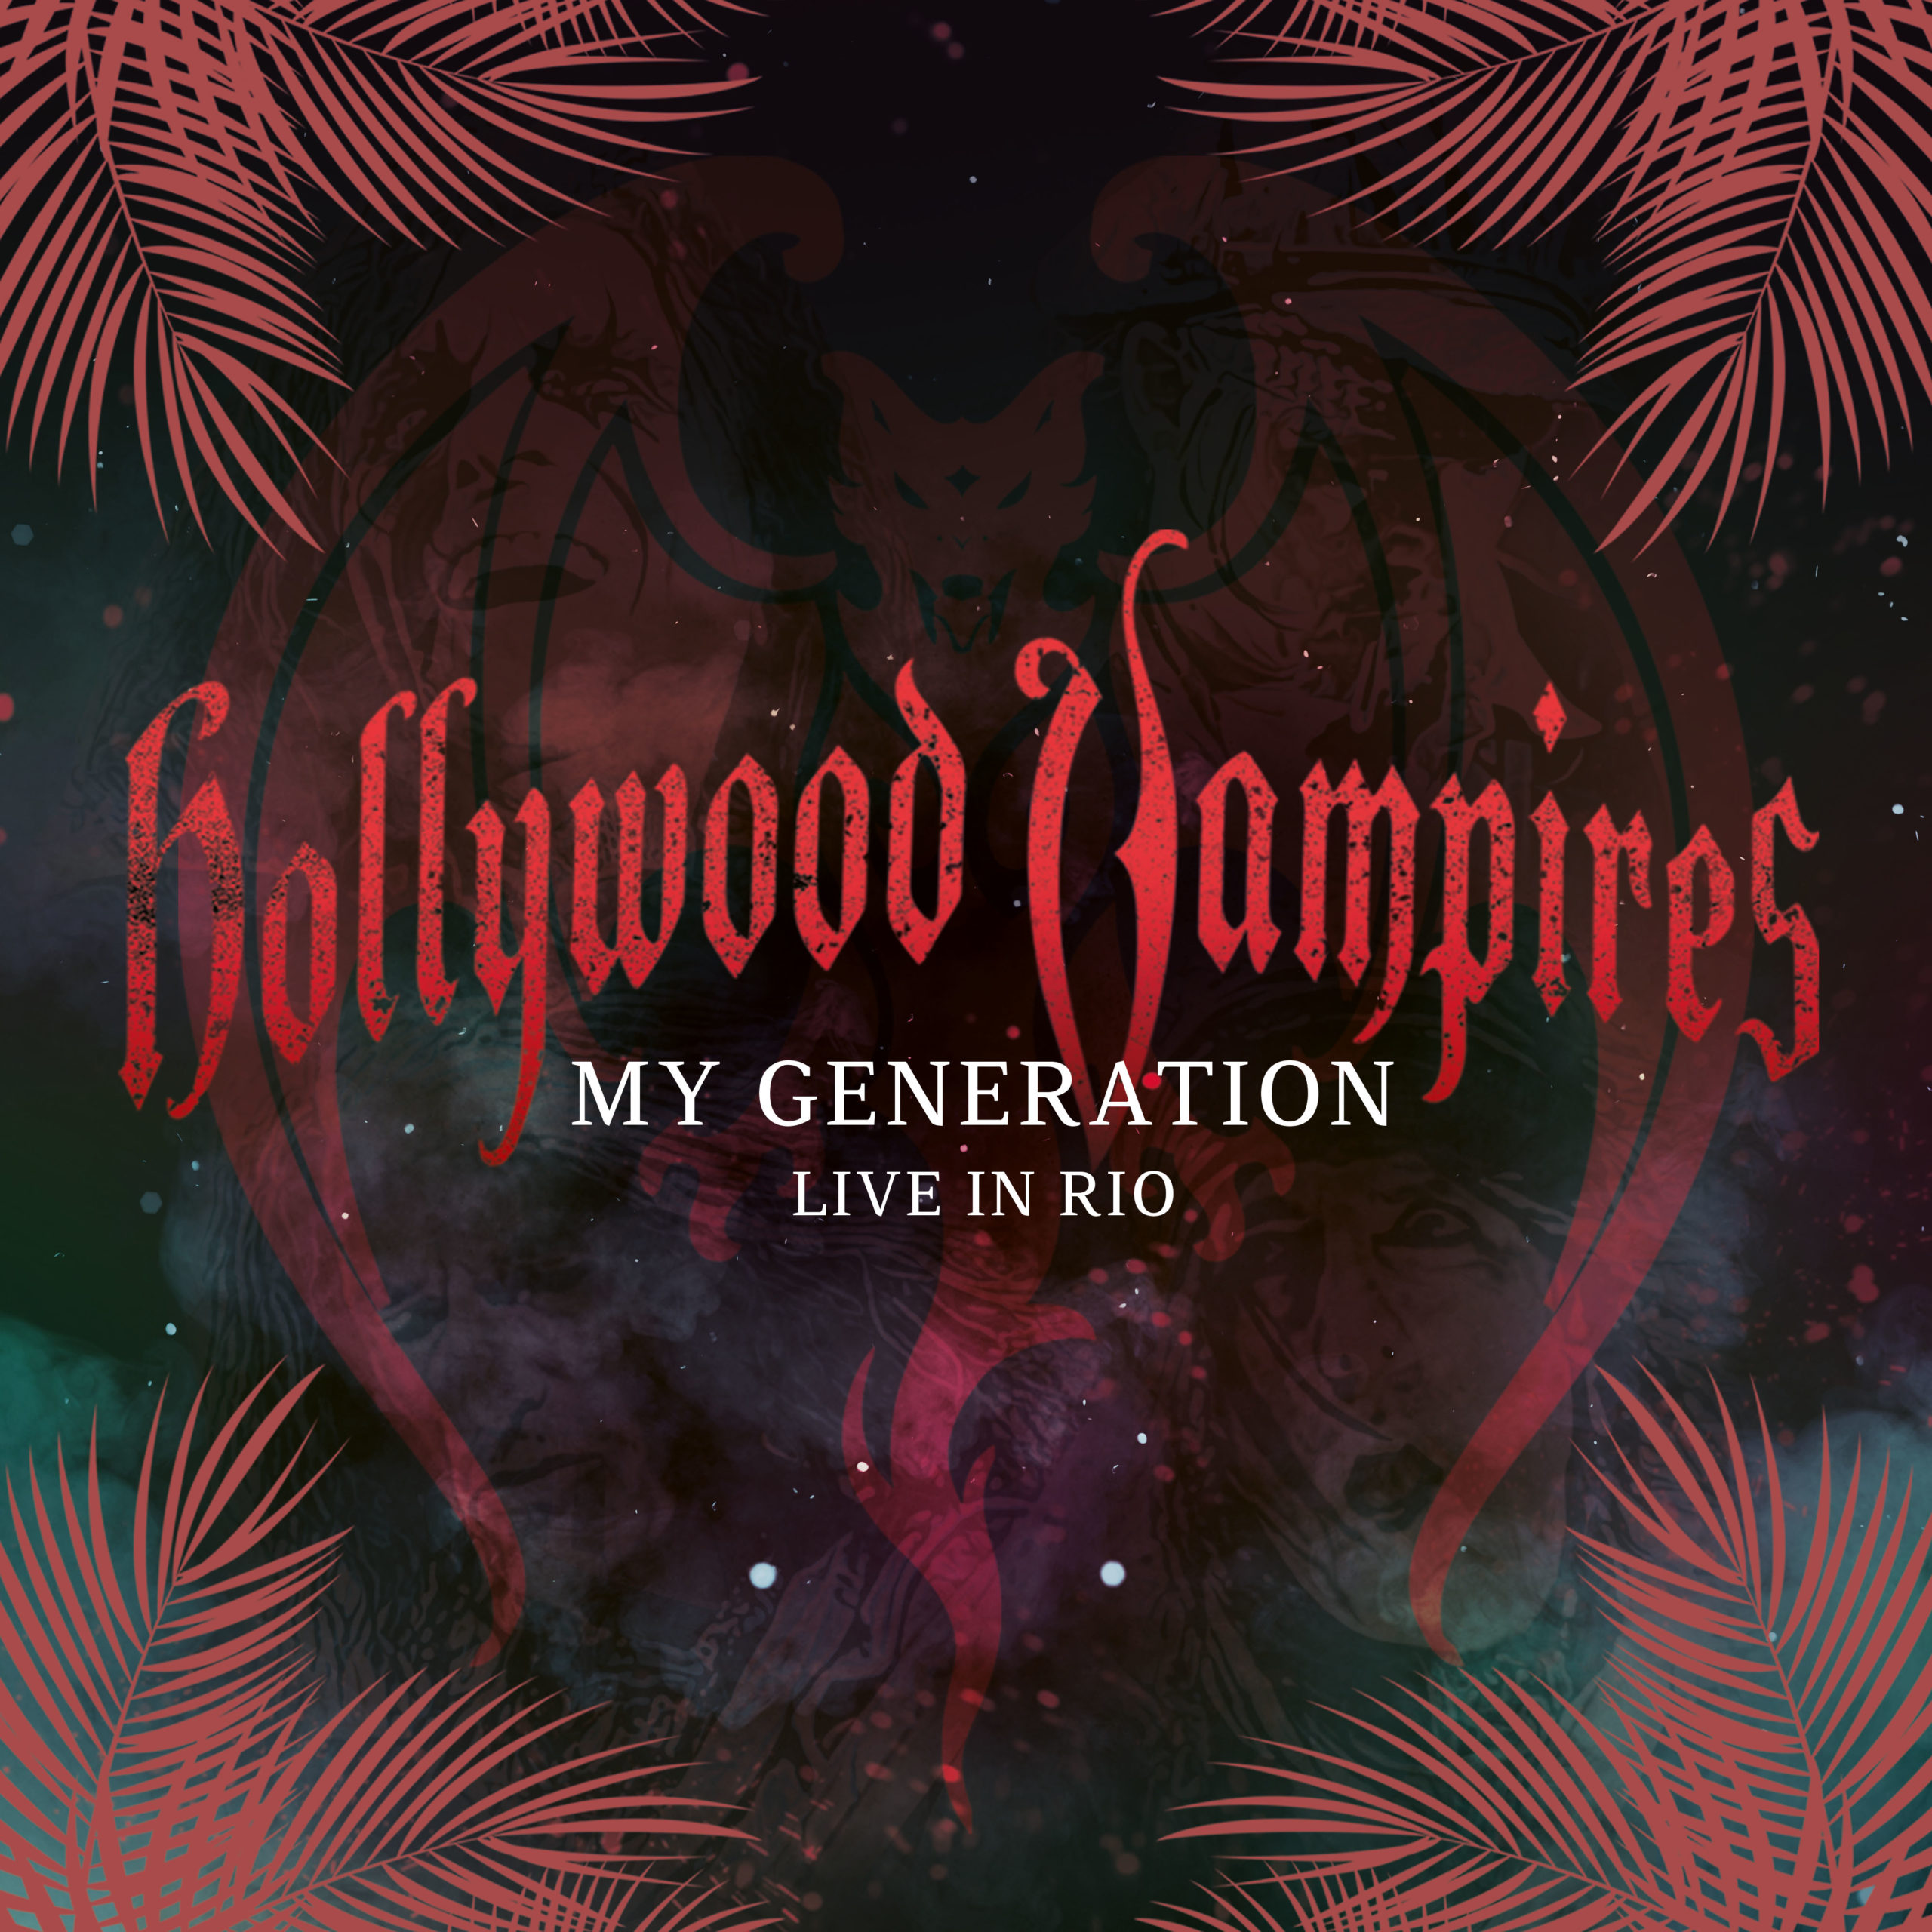 Musikreview: „My Generation “ von HOLLYWOOD VAMPIRES